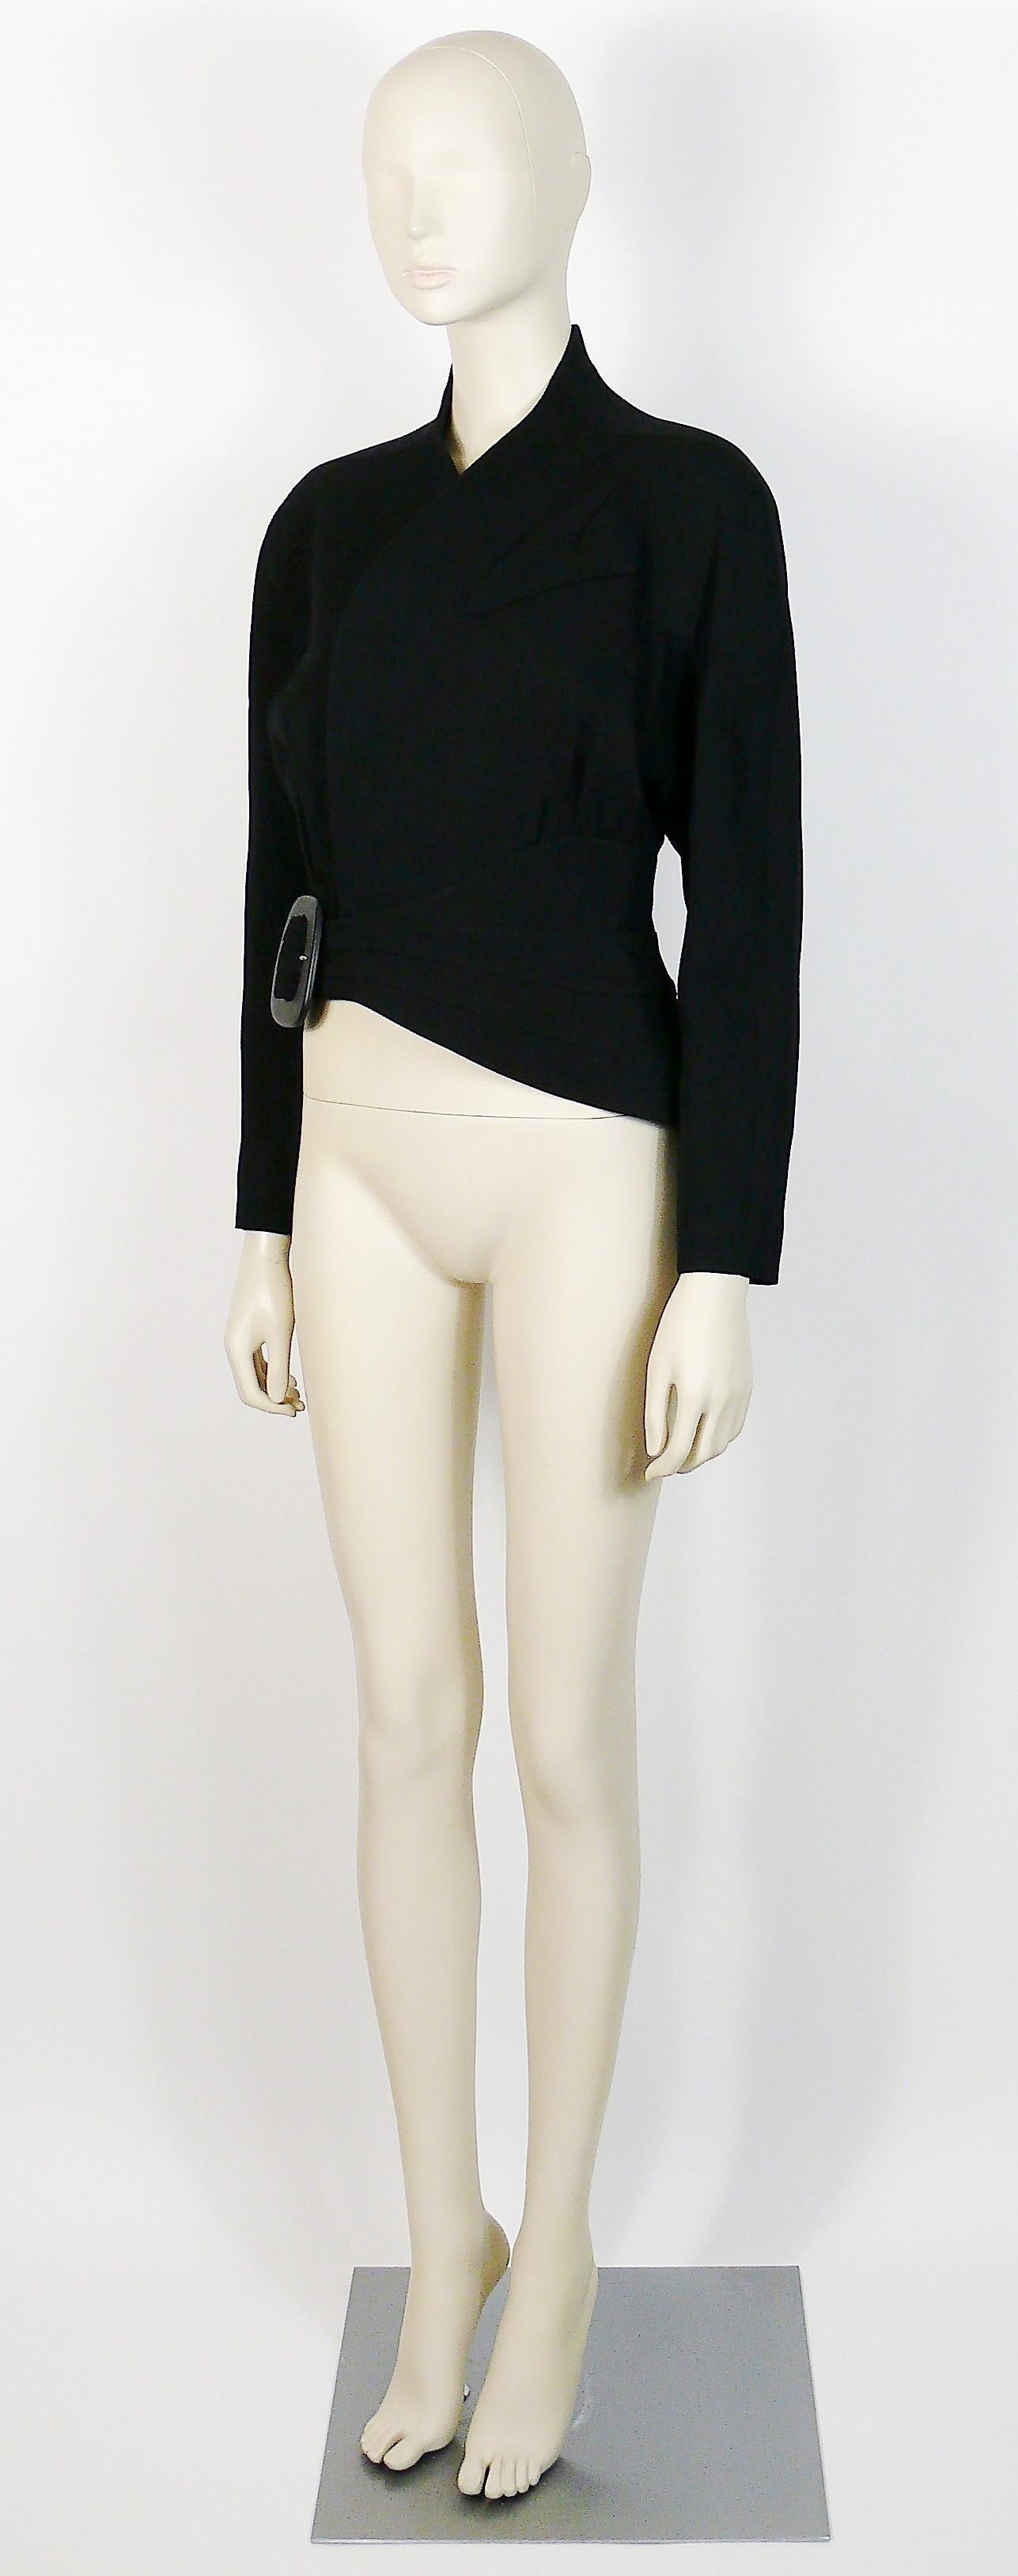 Thierry Mugler Vintage Black Asymmetrical Iconic Jacket 1